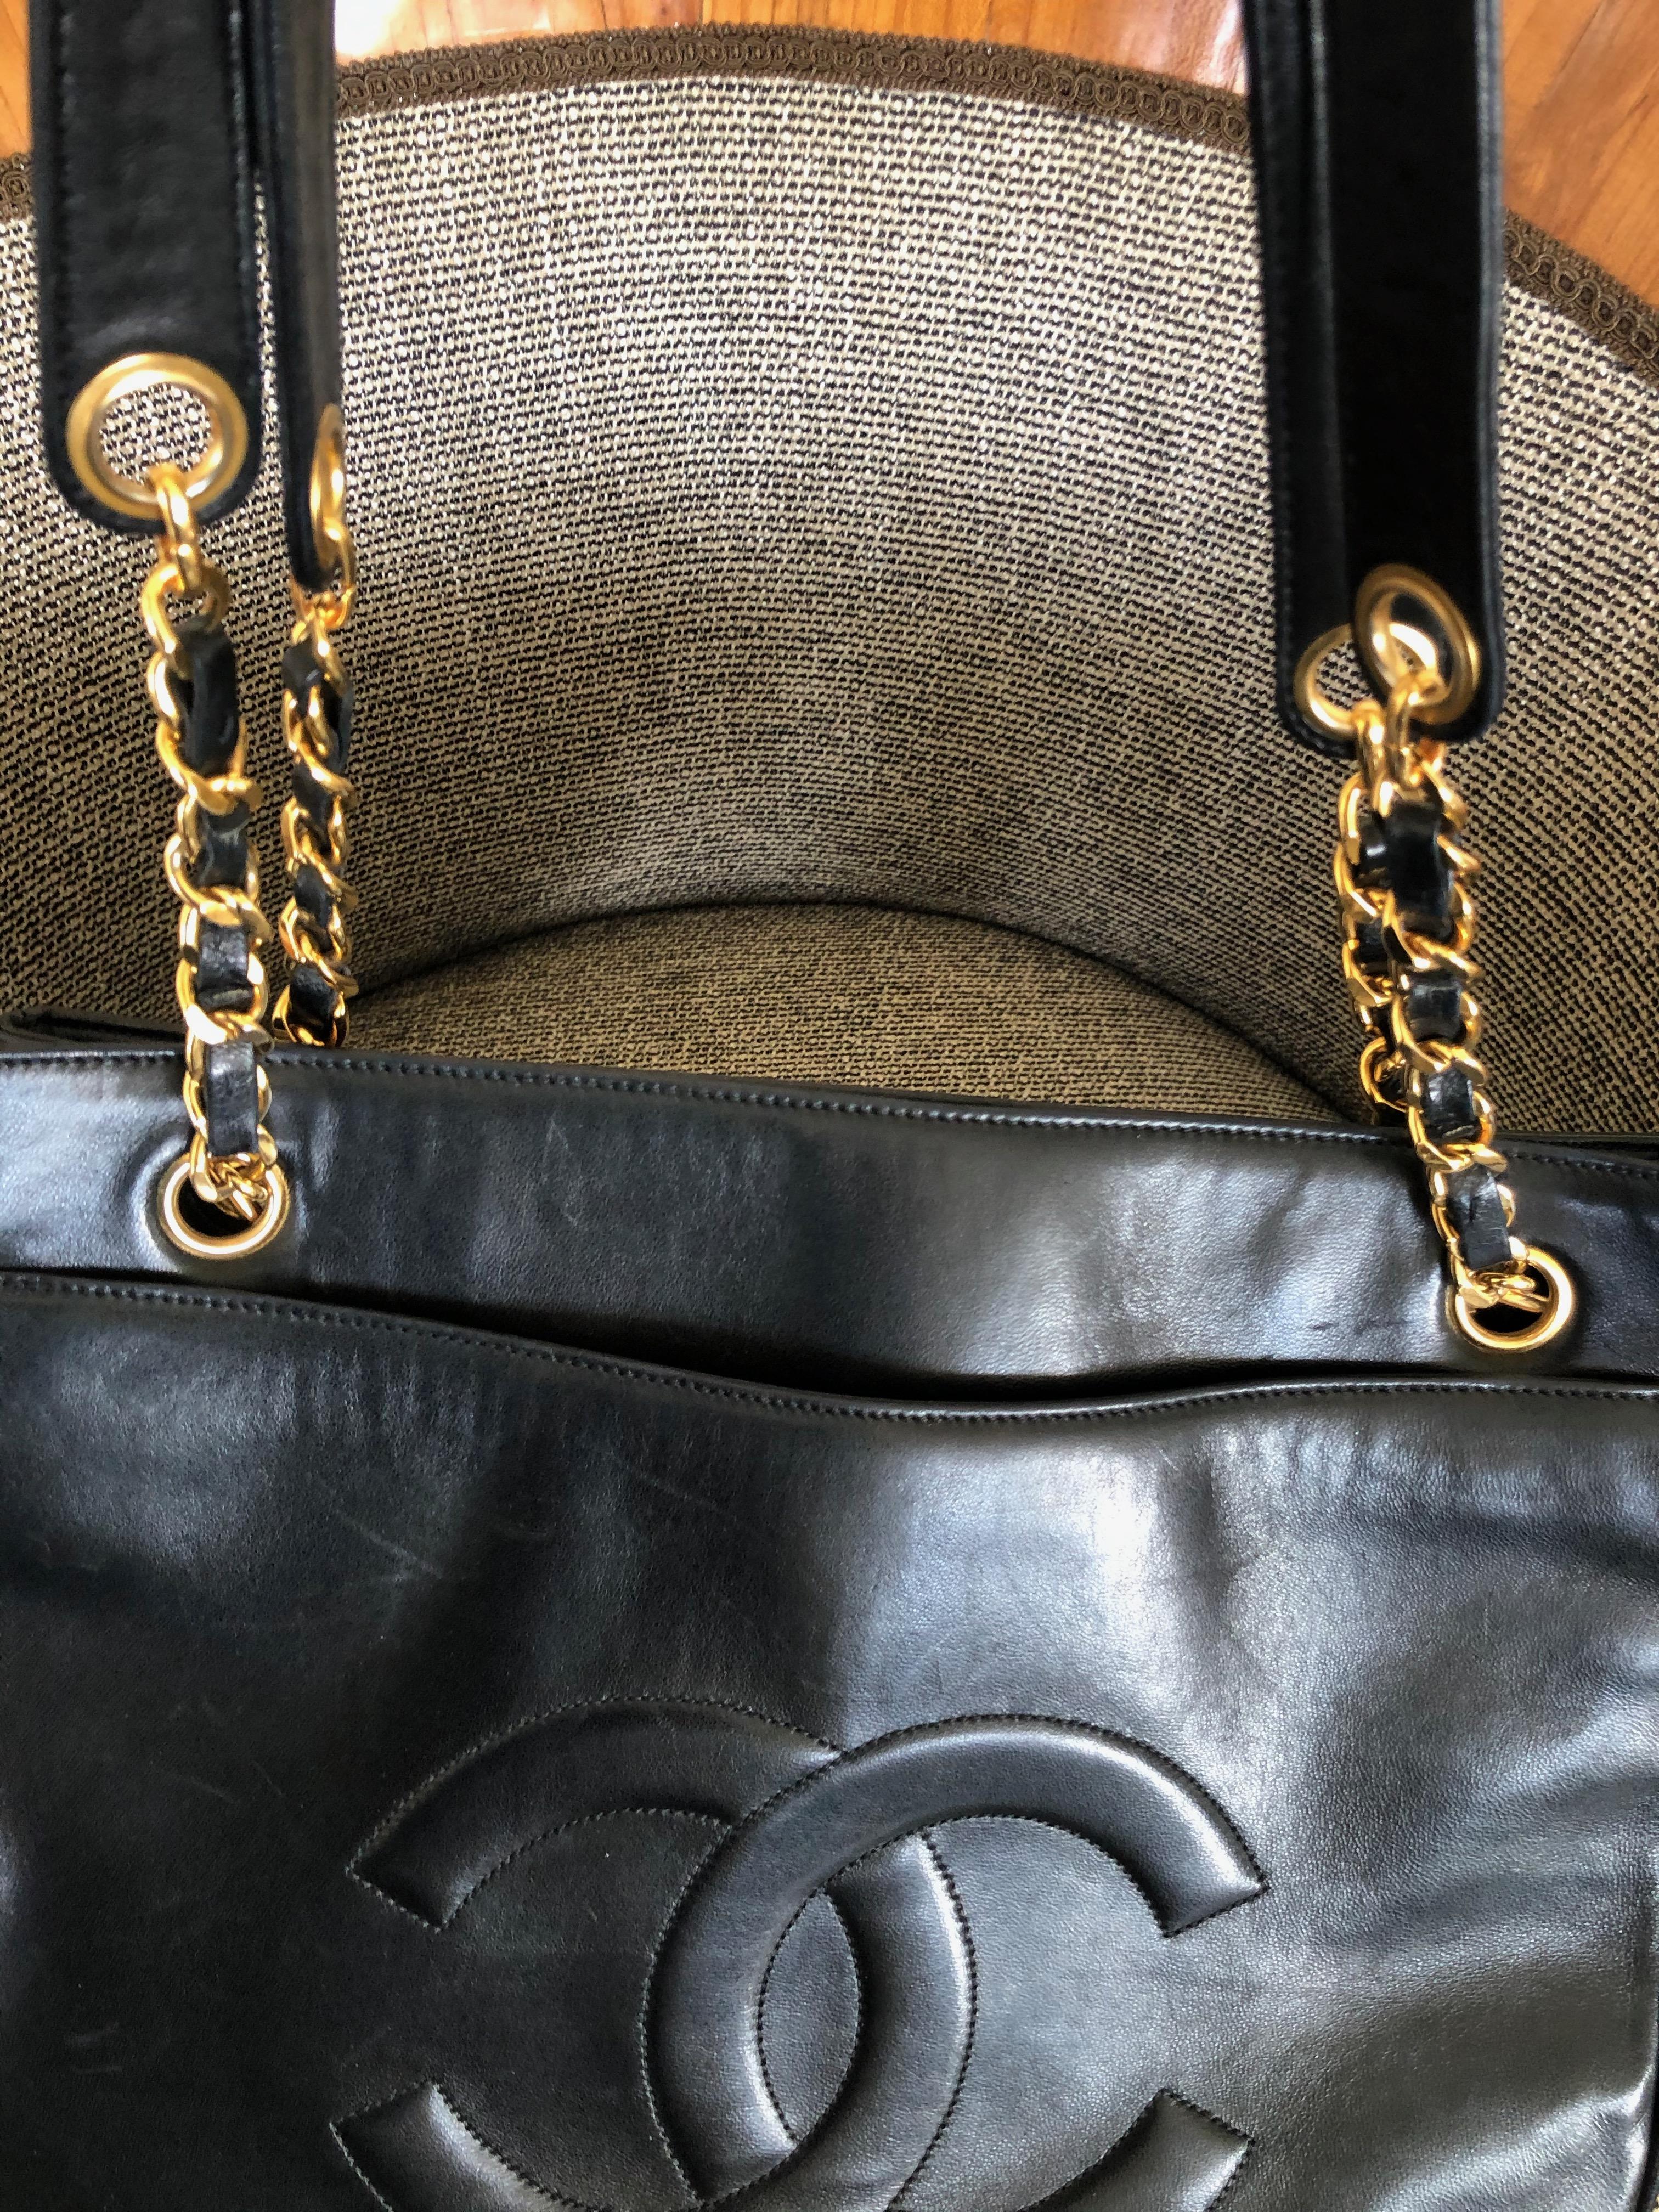 Chanel Large Vintage Black Leather Shopping Bag w Large CC Logo & Gold Hardware For Sale 1